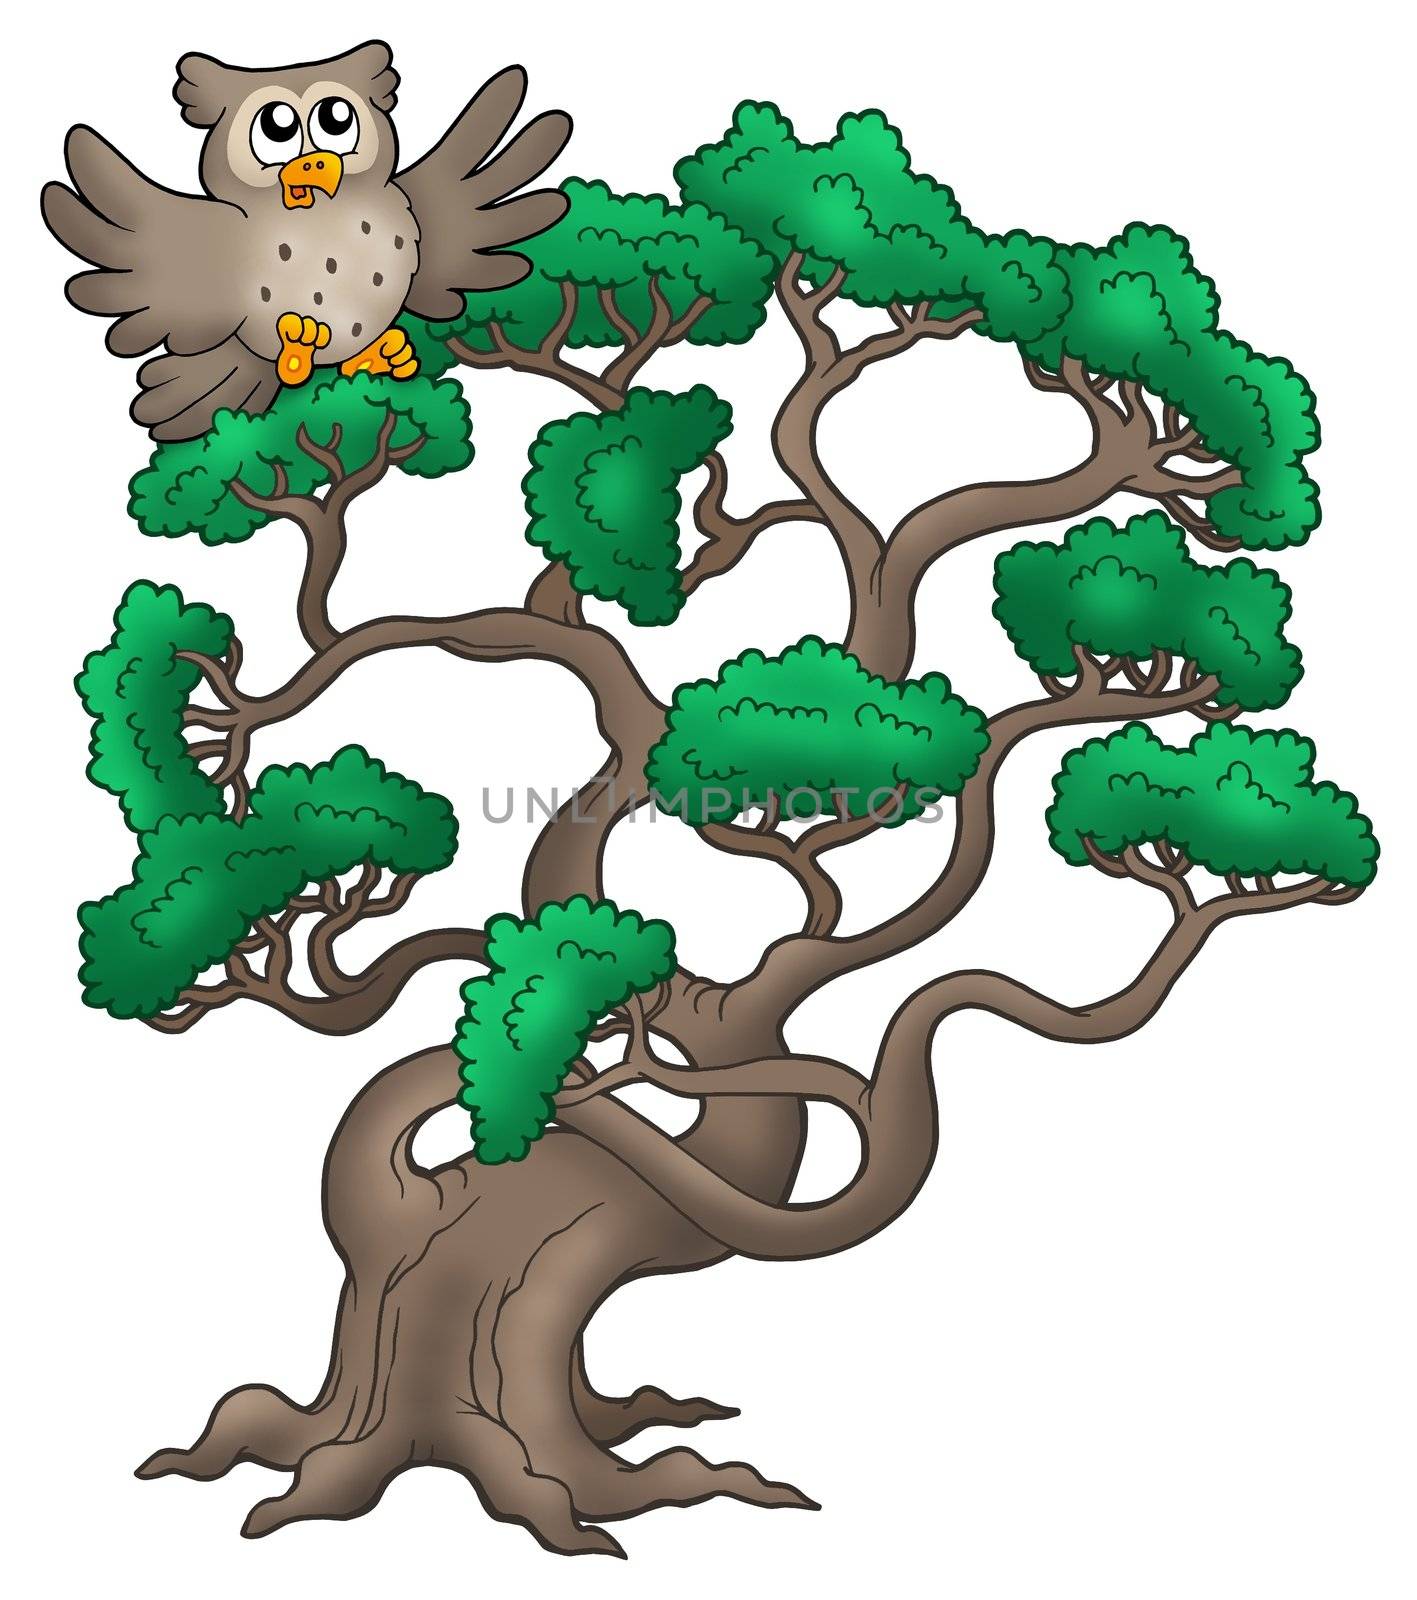 Big pine tree with cartoon owl - color illustration.